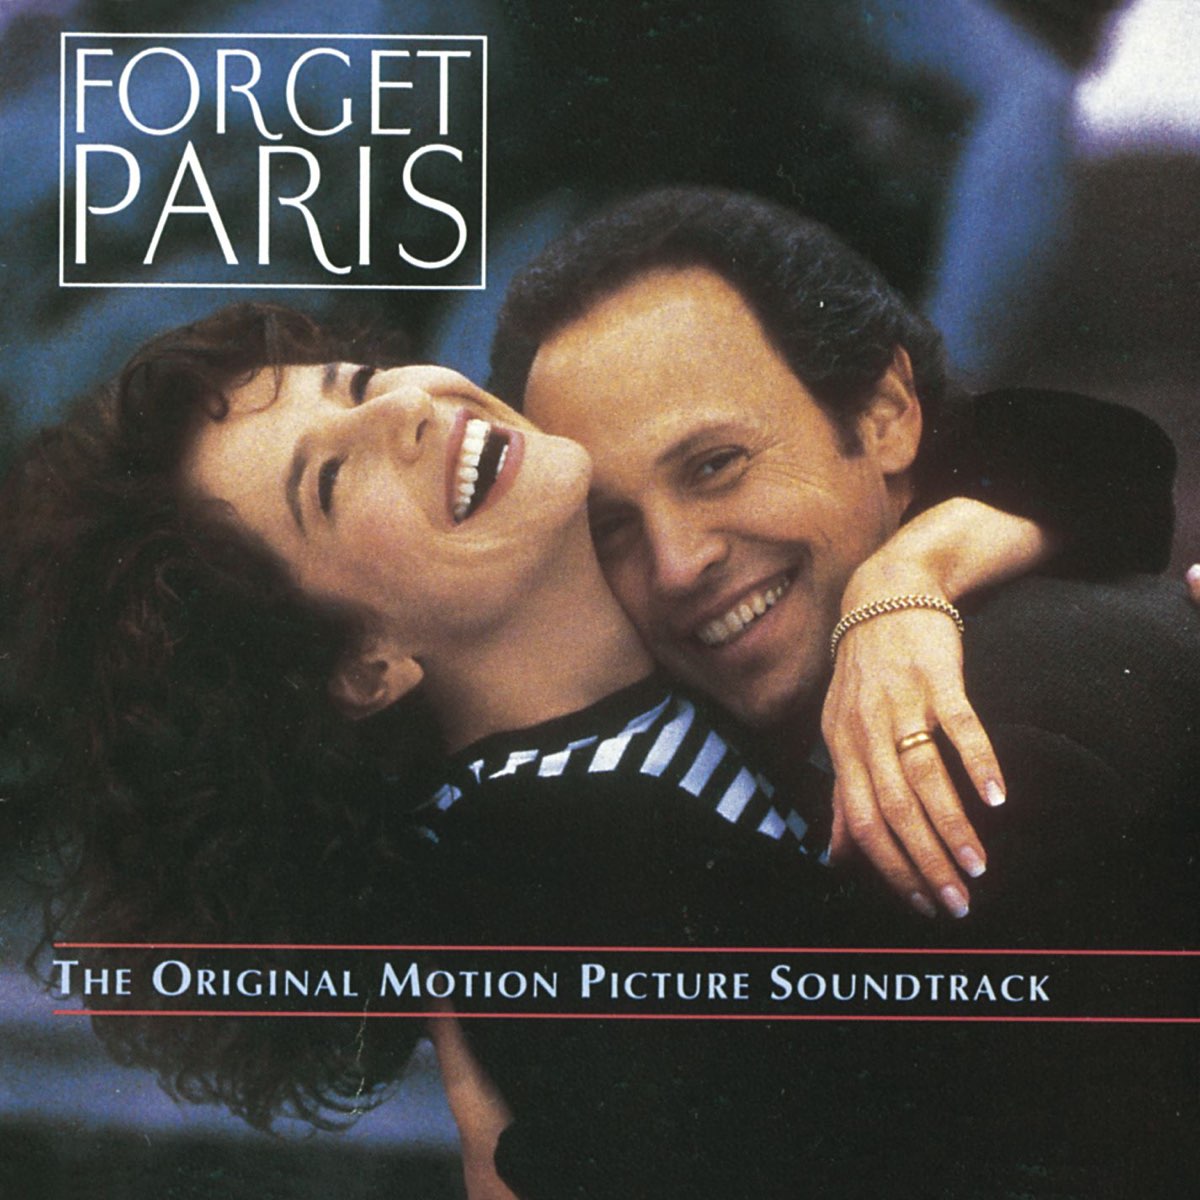 Forget Paris (The Original Motion Picture Soundtrack) - Album by Various  Artists - Apple Music